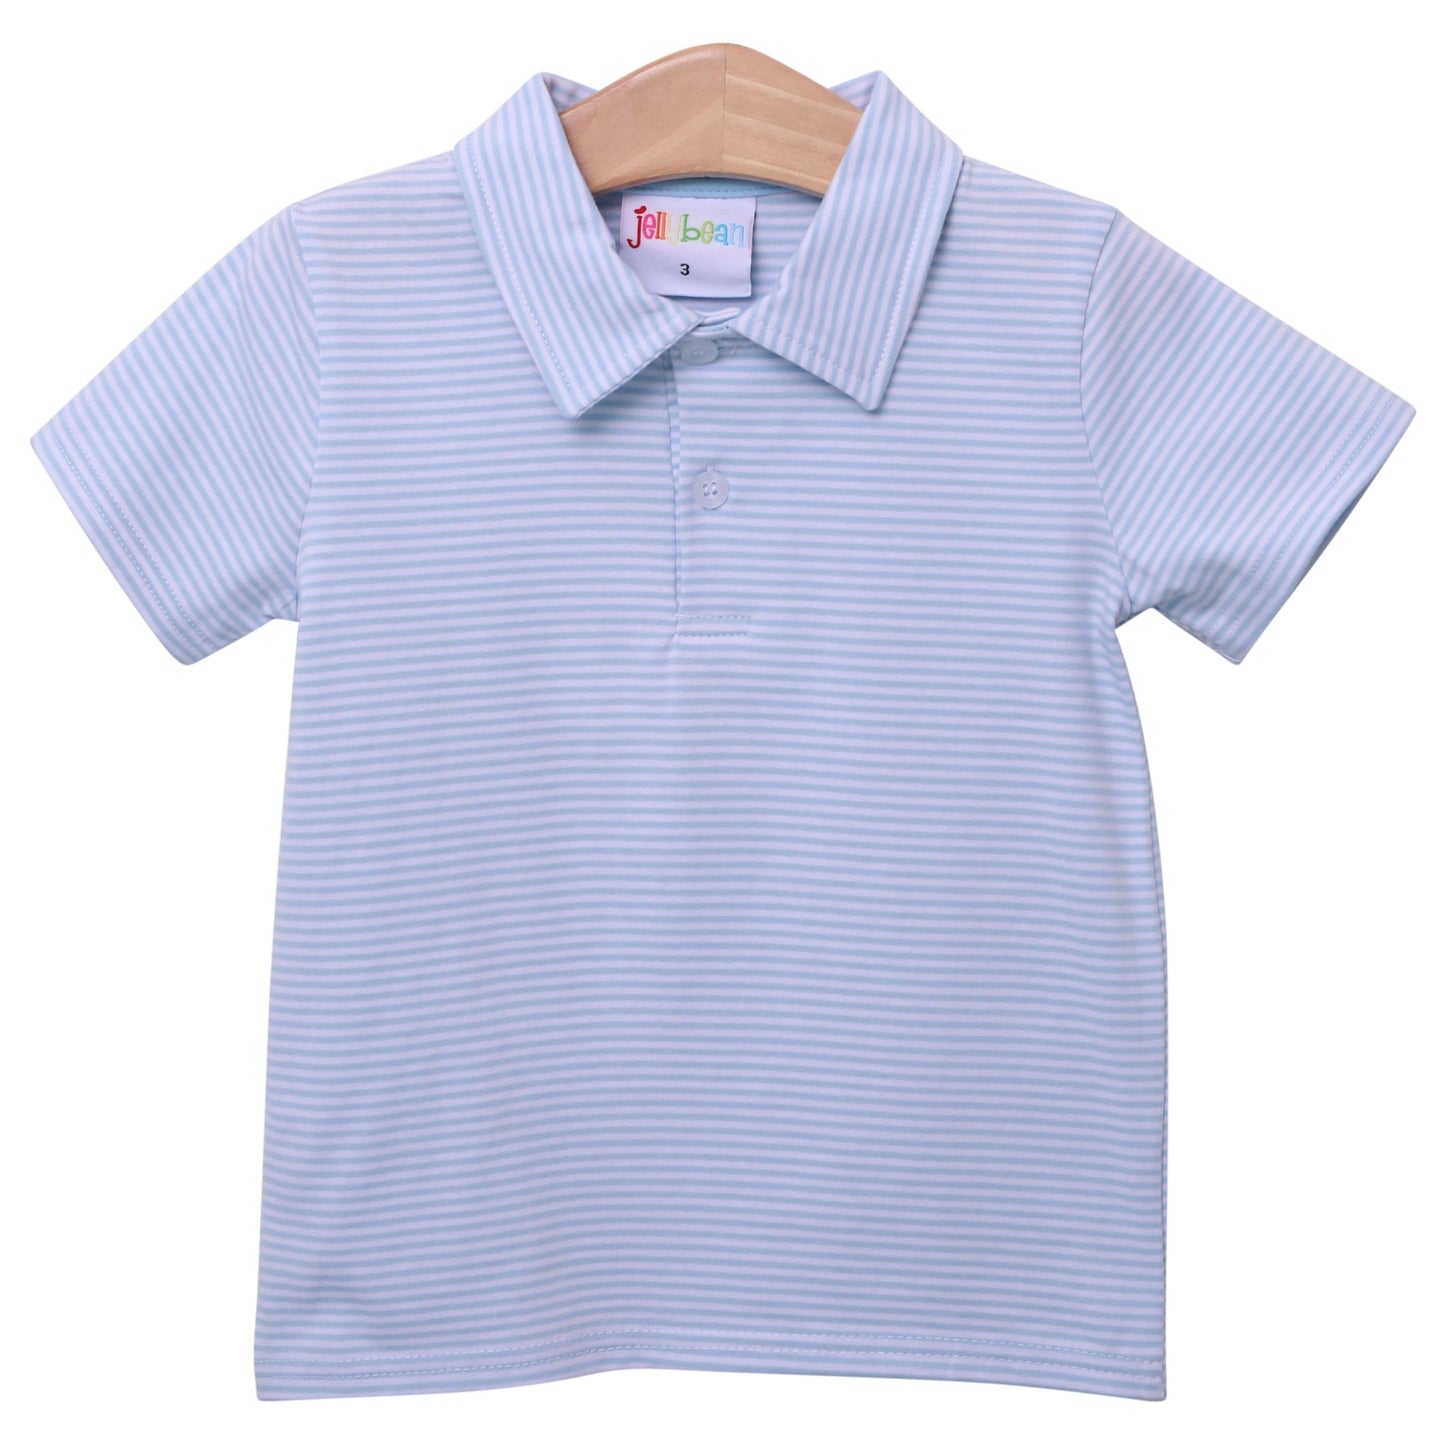 Michael Polo Shirt - Light Blue Stripe